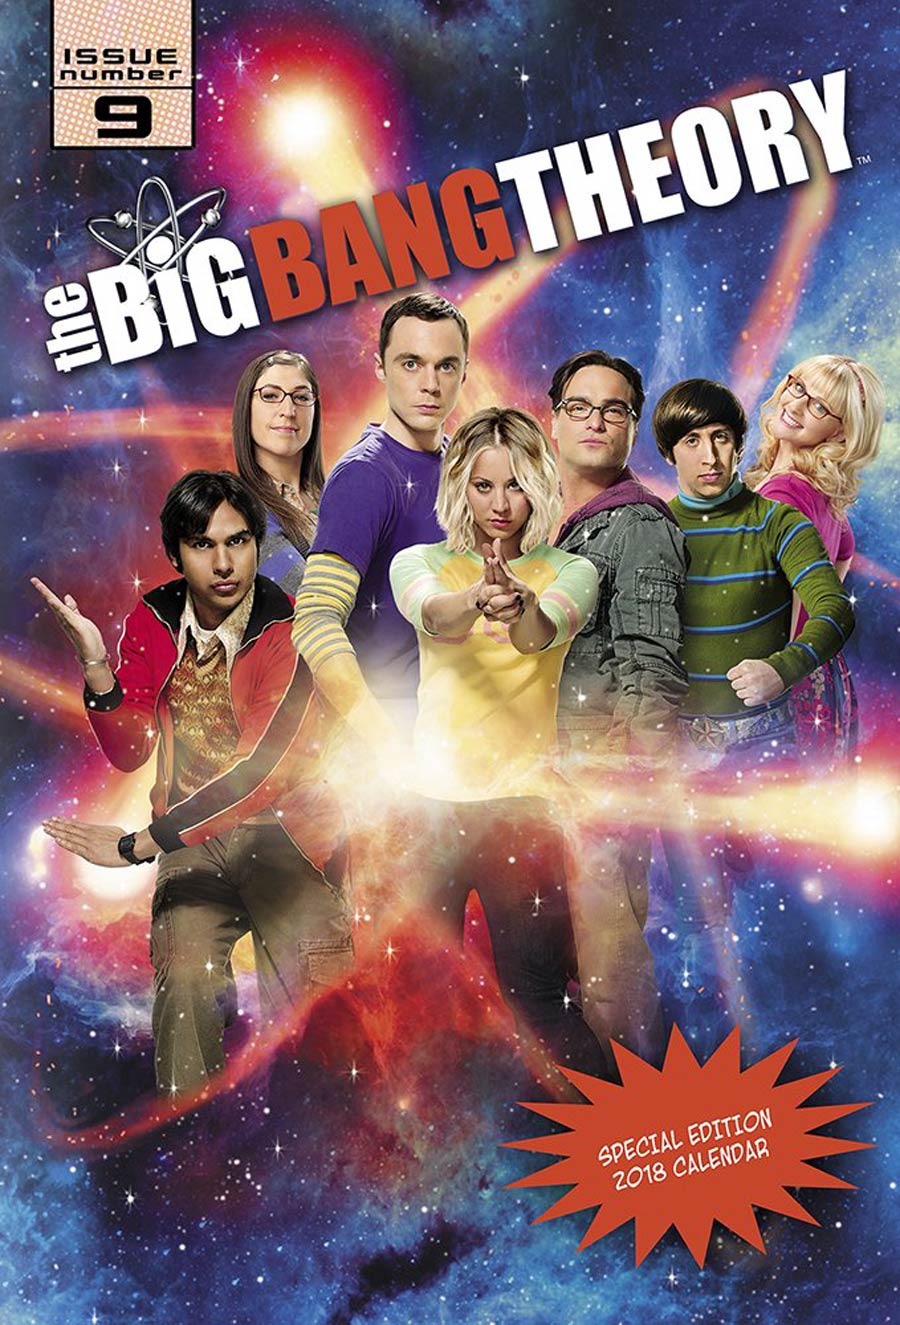 Big Bang Theory 2018 9x14-inch Wall Calendar